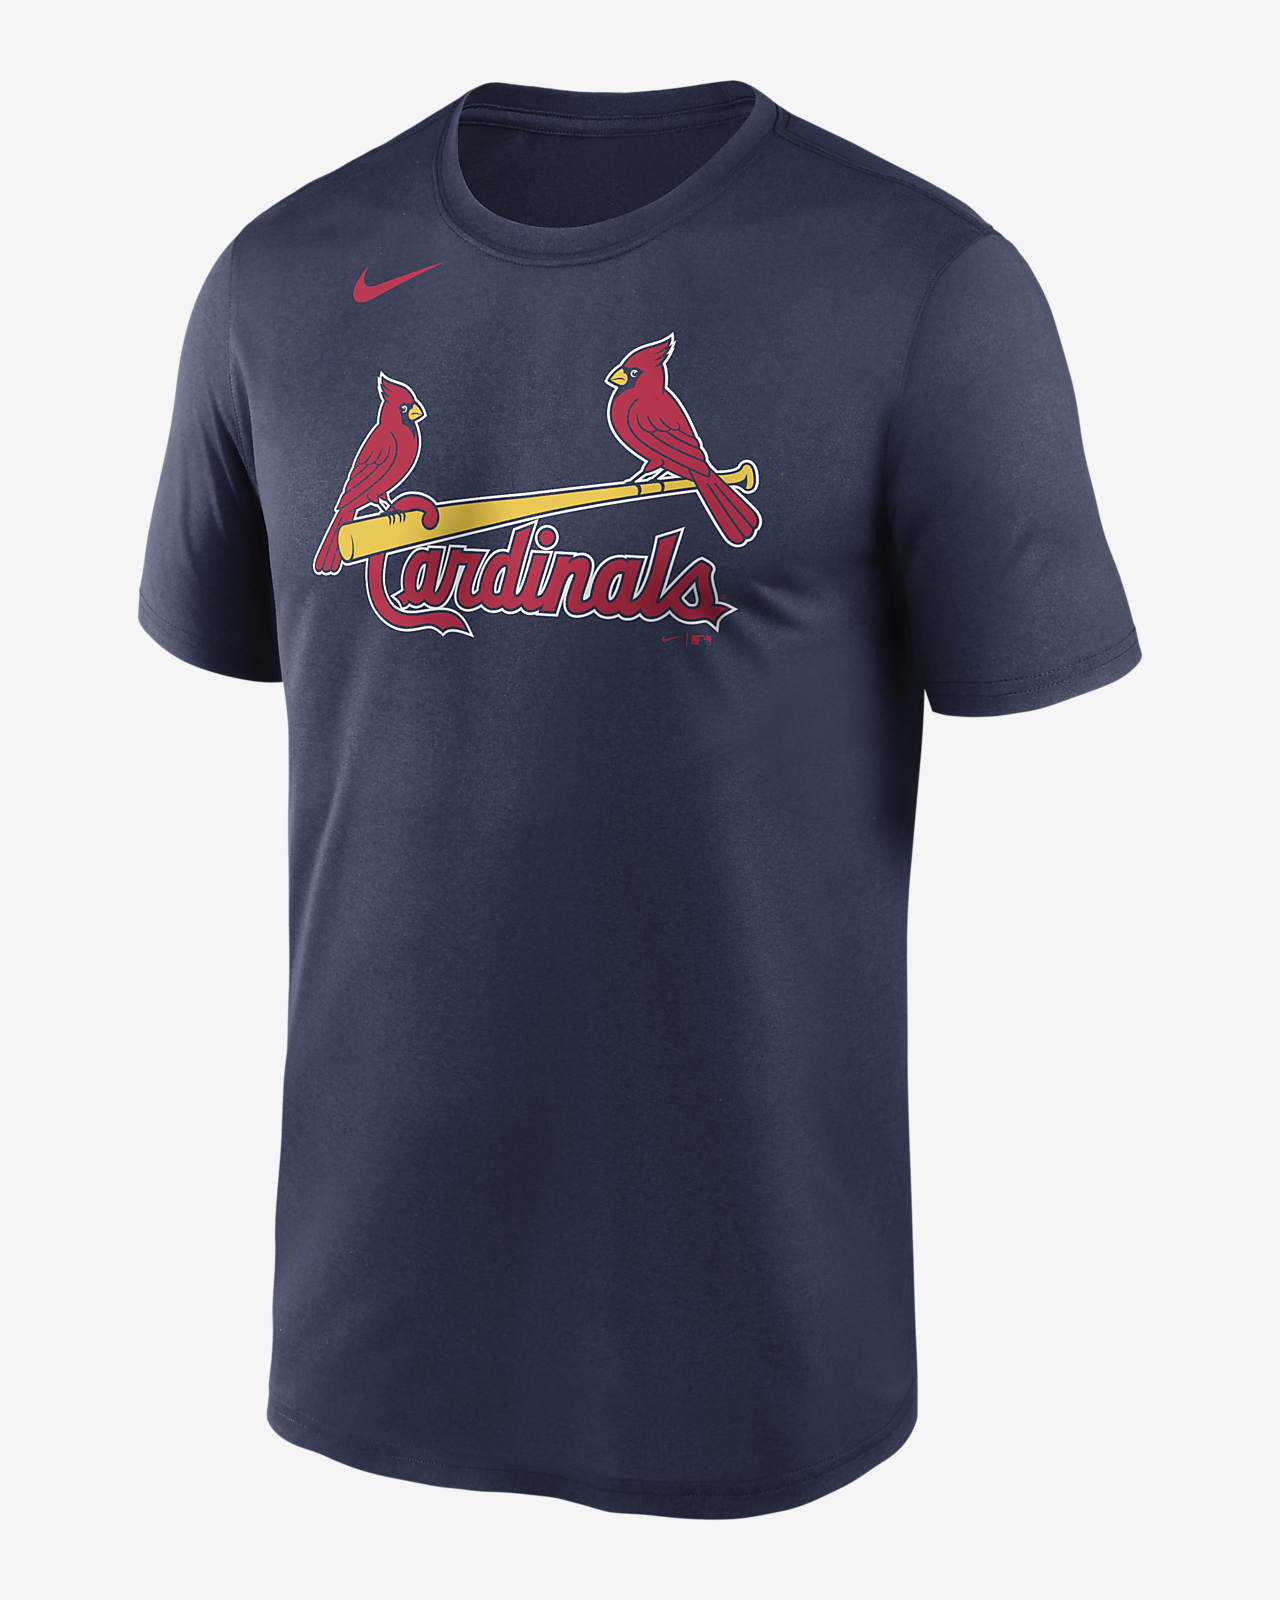 Nike Dri-FIT Legend Wordmark (MLB St. Louis Cardinals) Men's T-Shirt